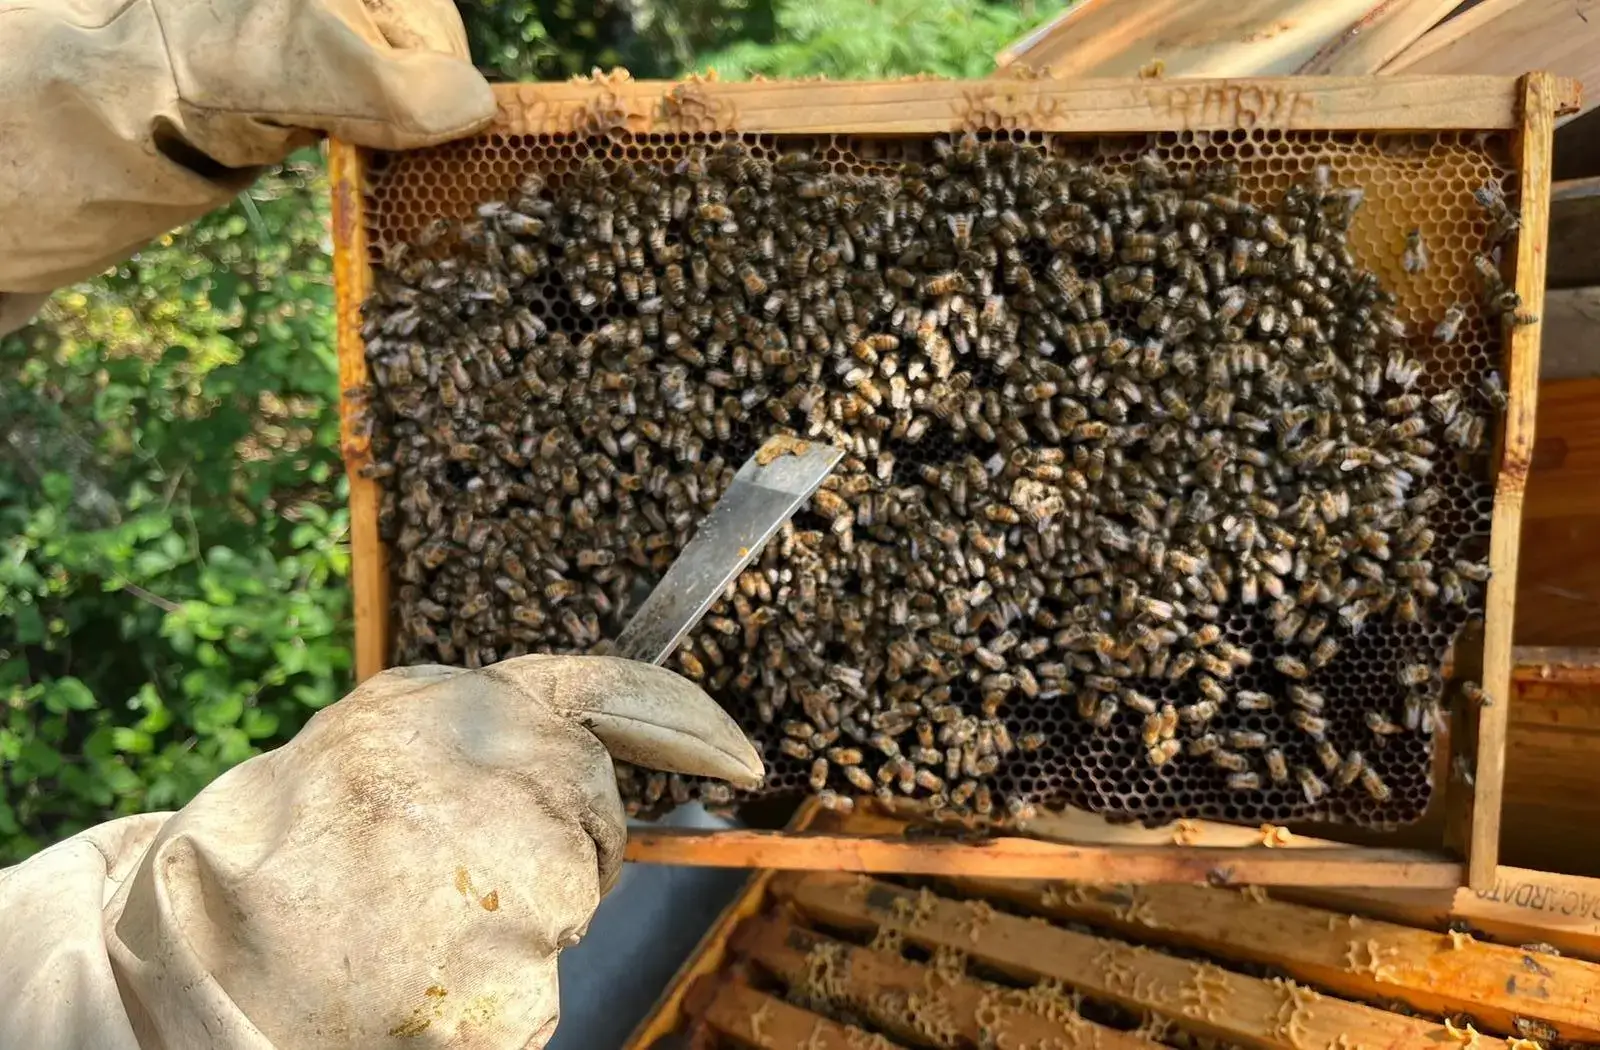 Inspection des ruches